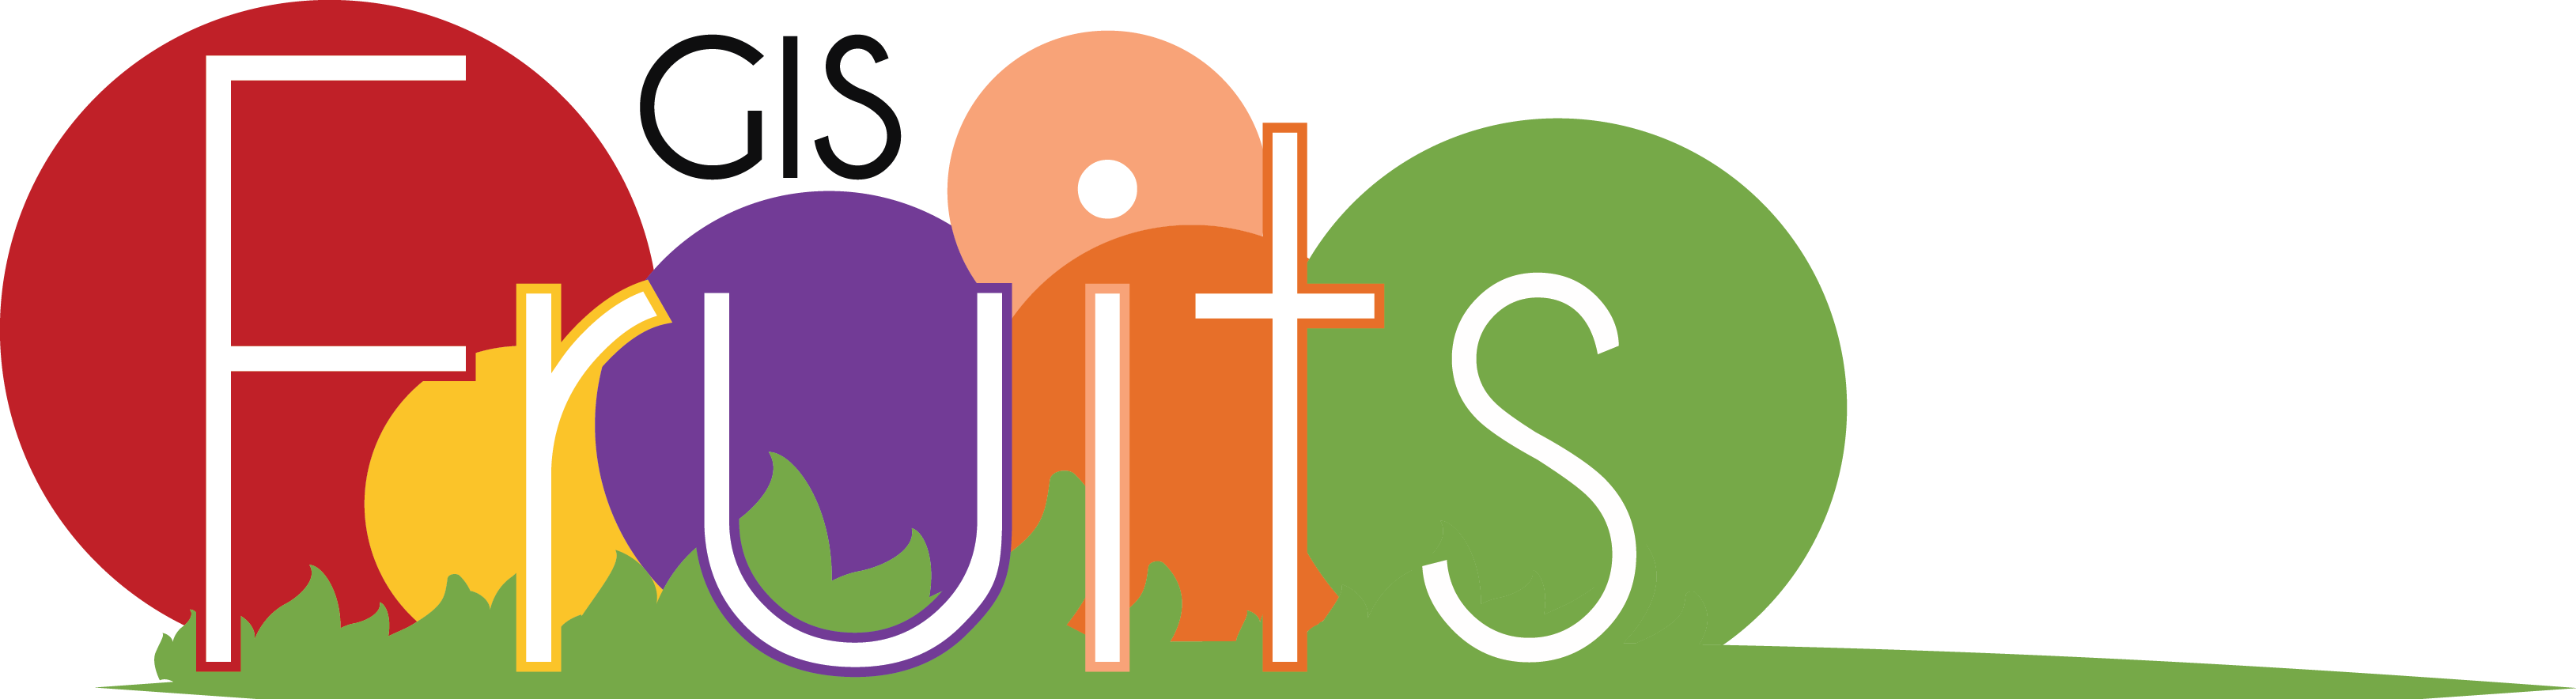 logo GIS Fruits